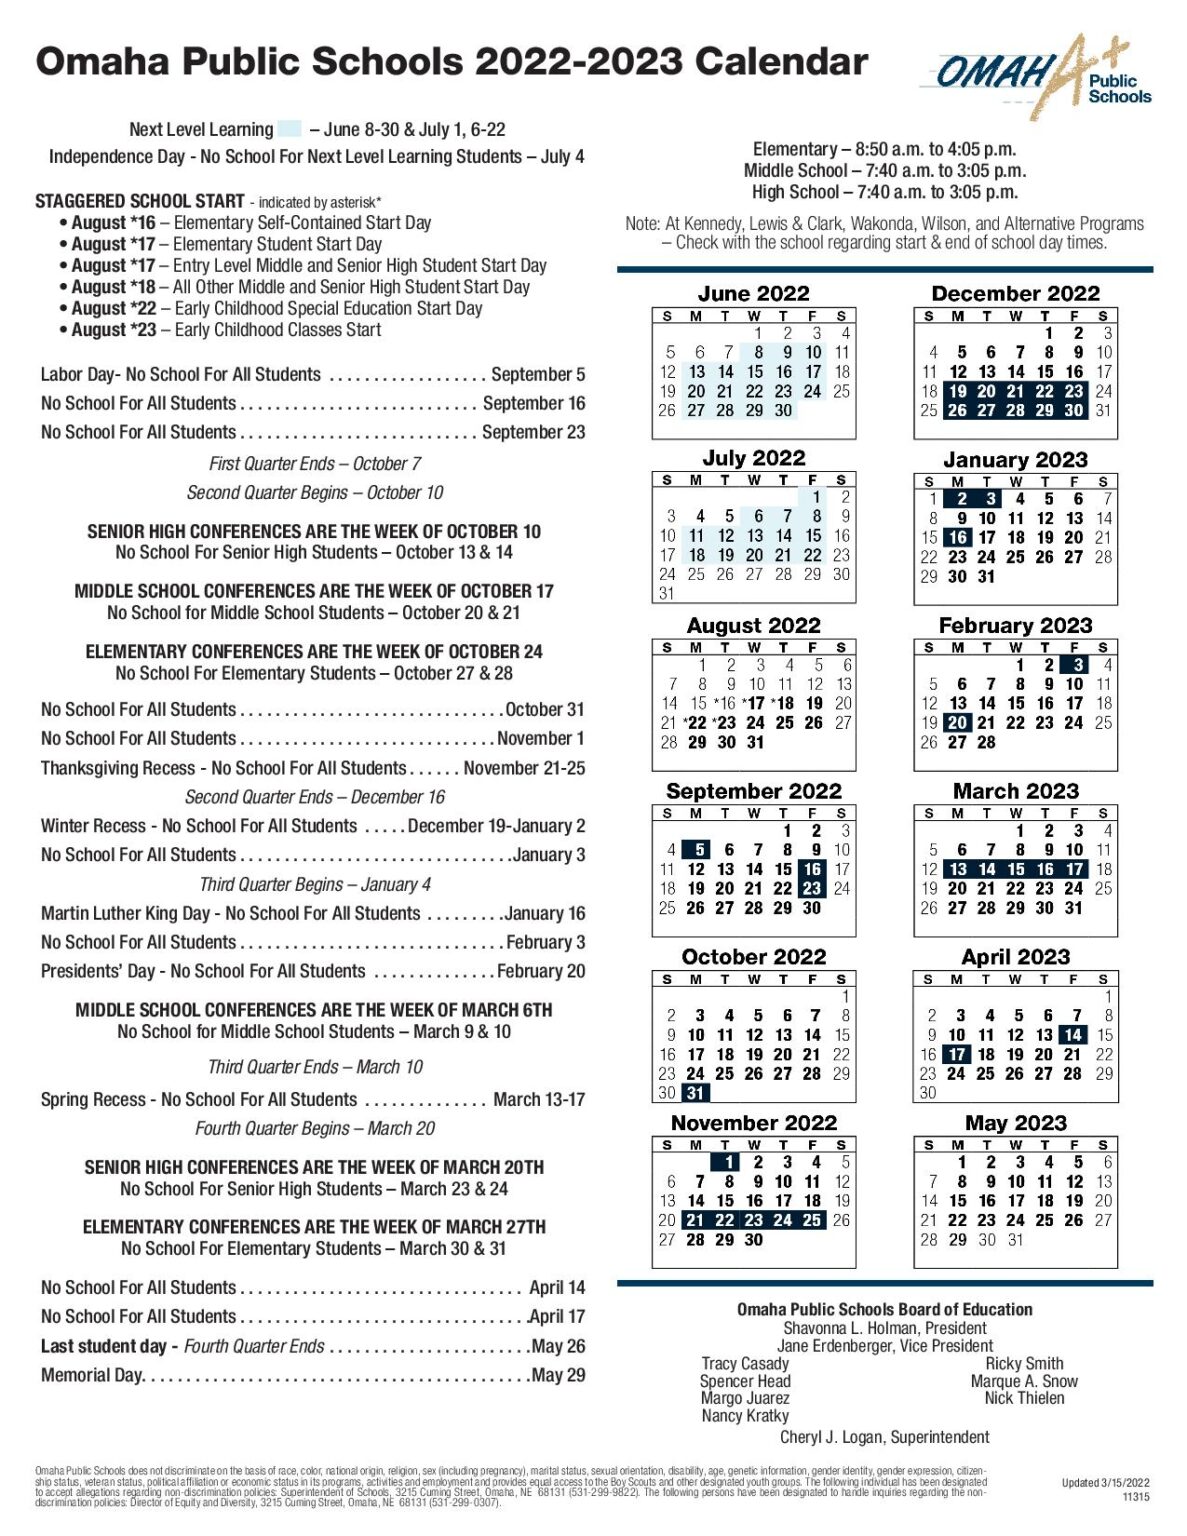 Omaha Public Schools Calendar Holidays 20222023 PDF